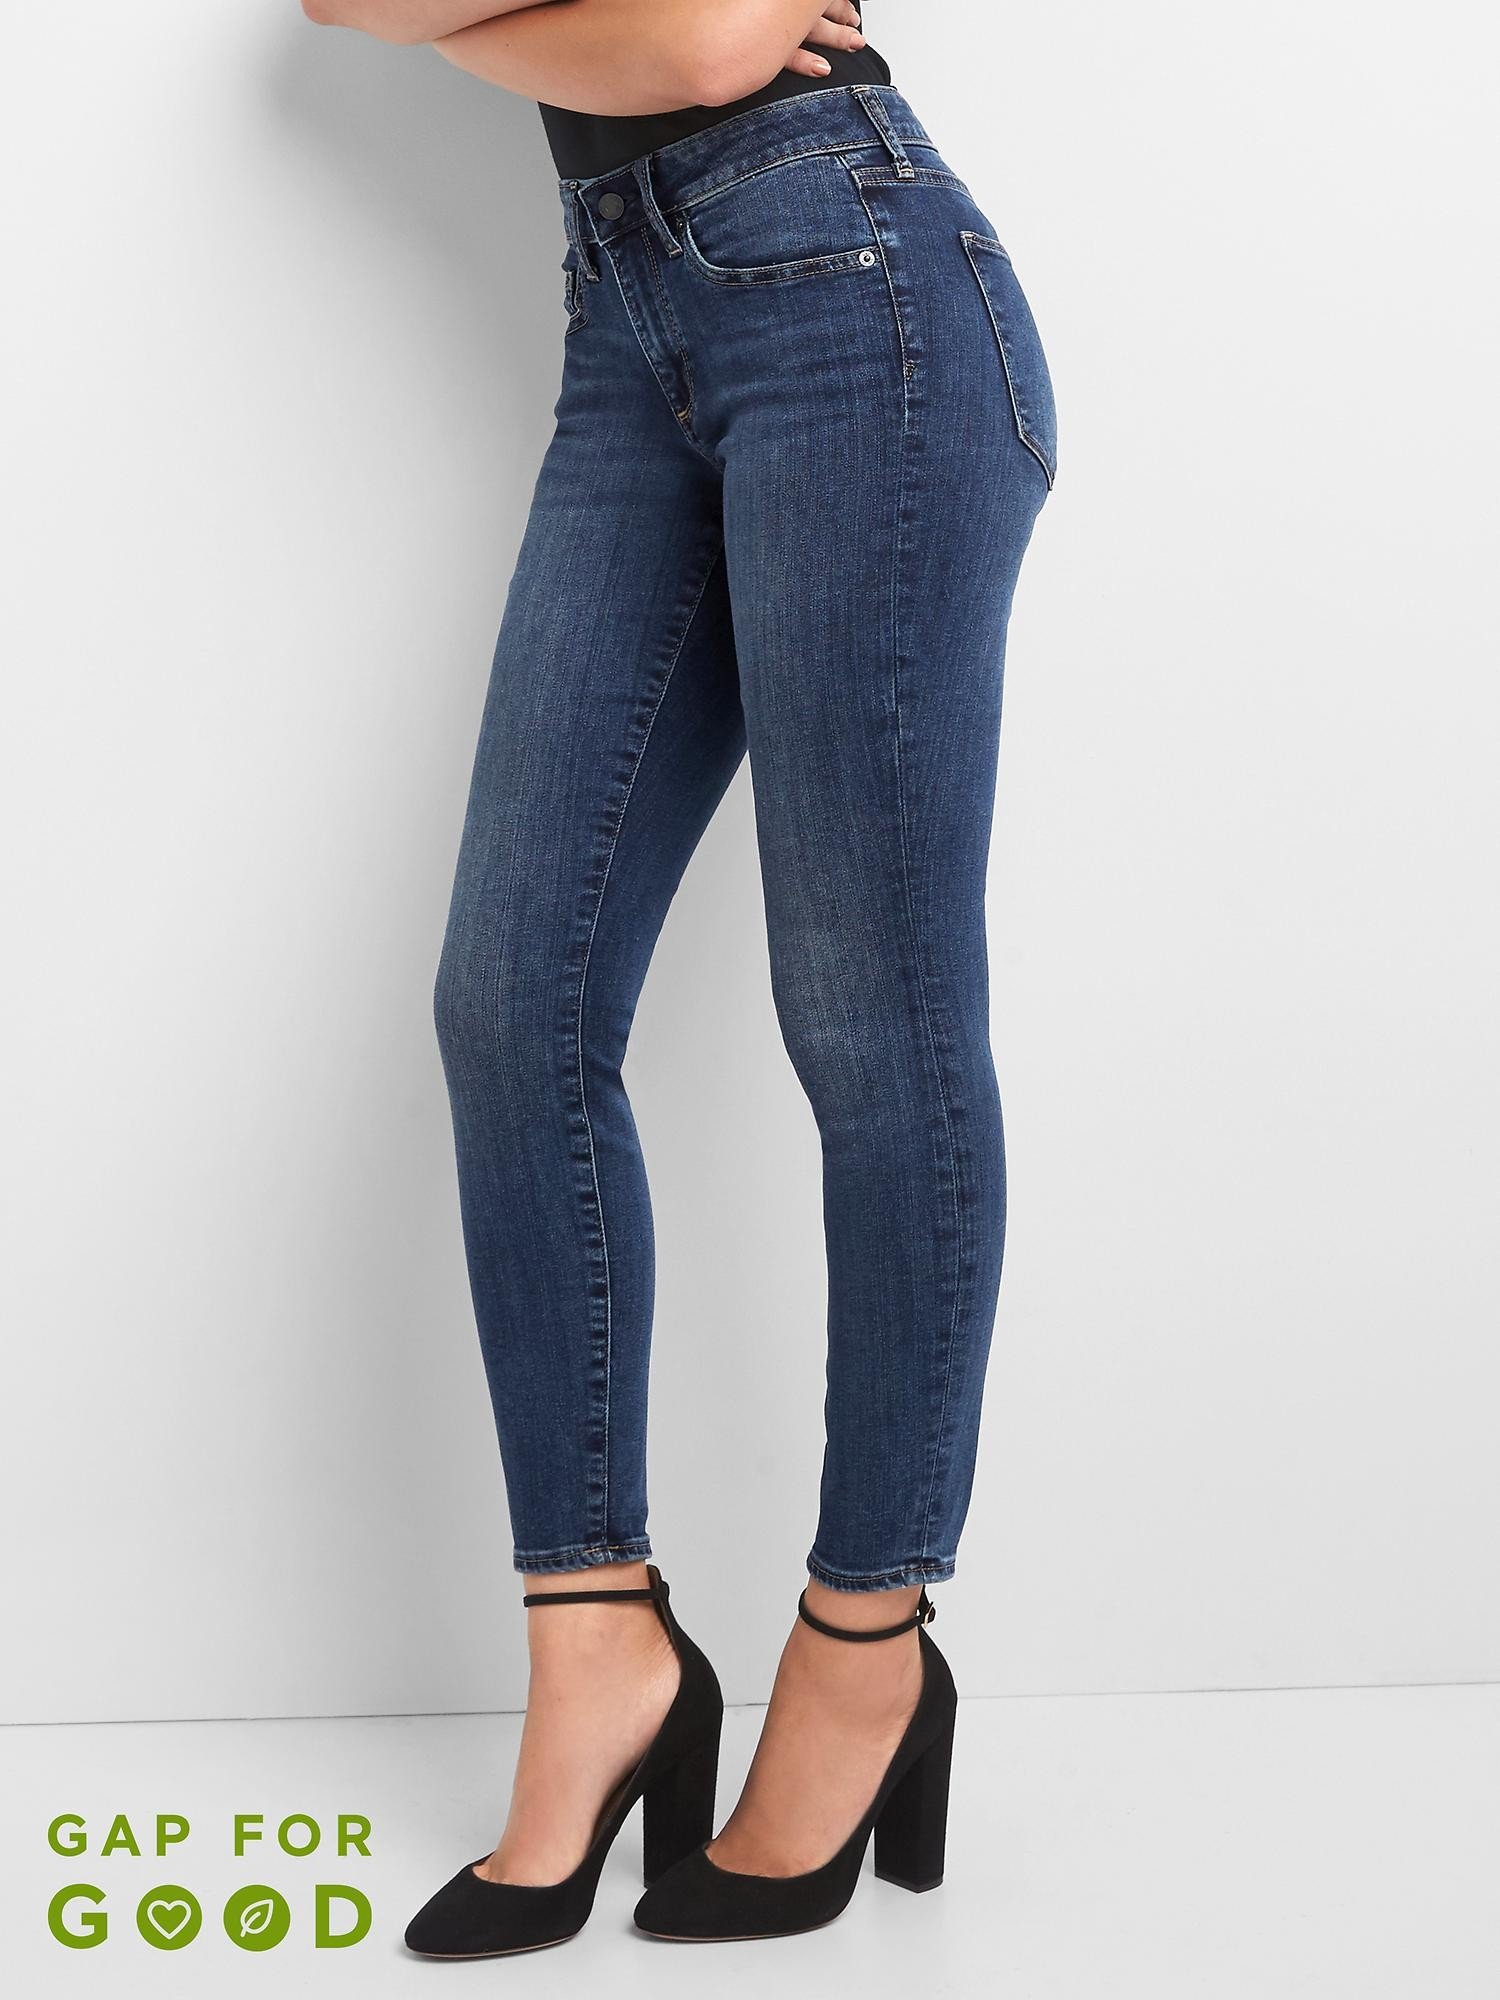 Orta belli curvy true skinny jean pantolon product image